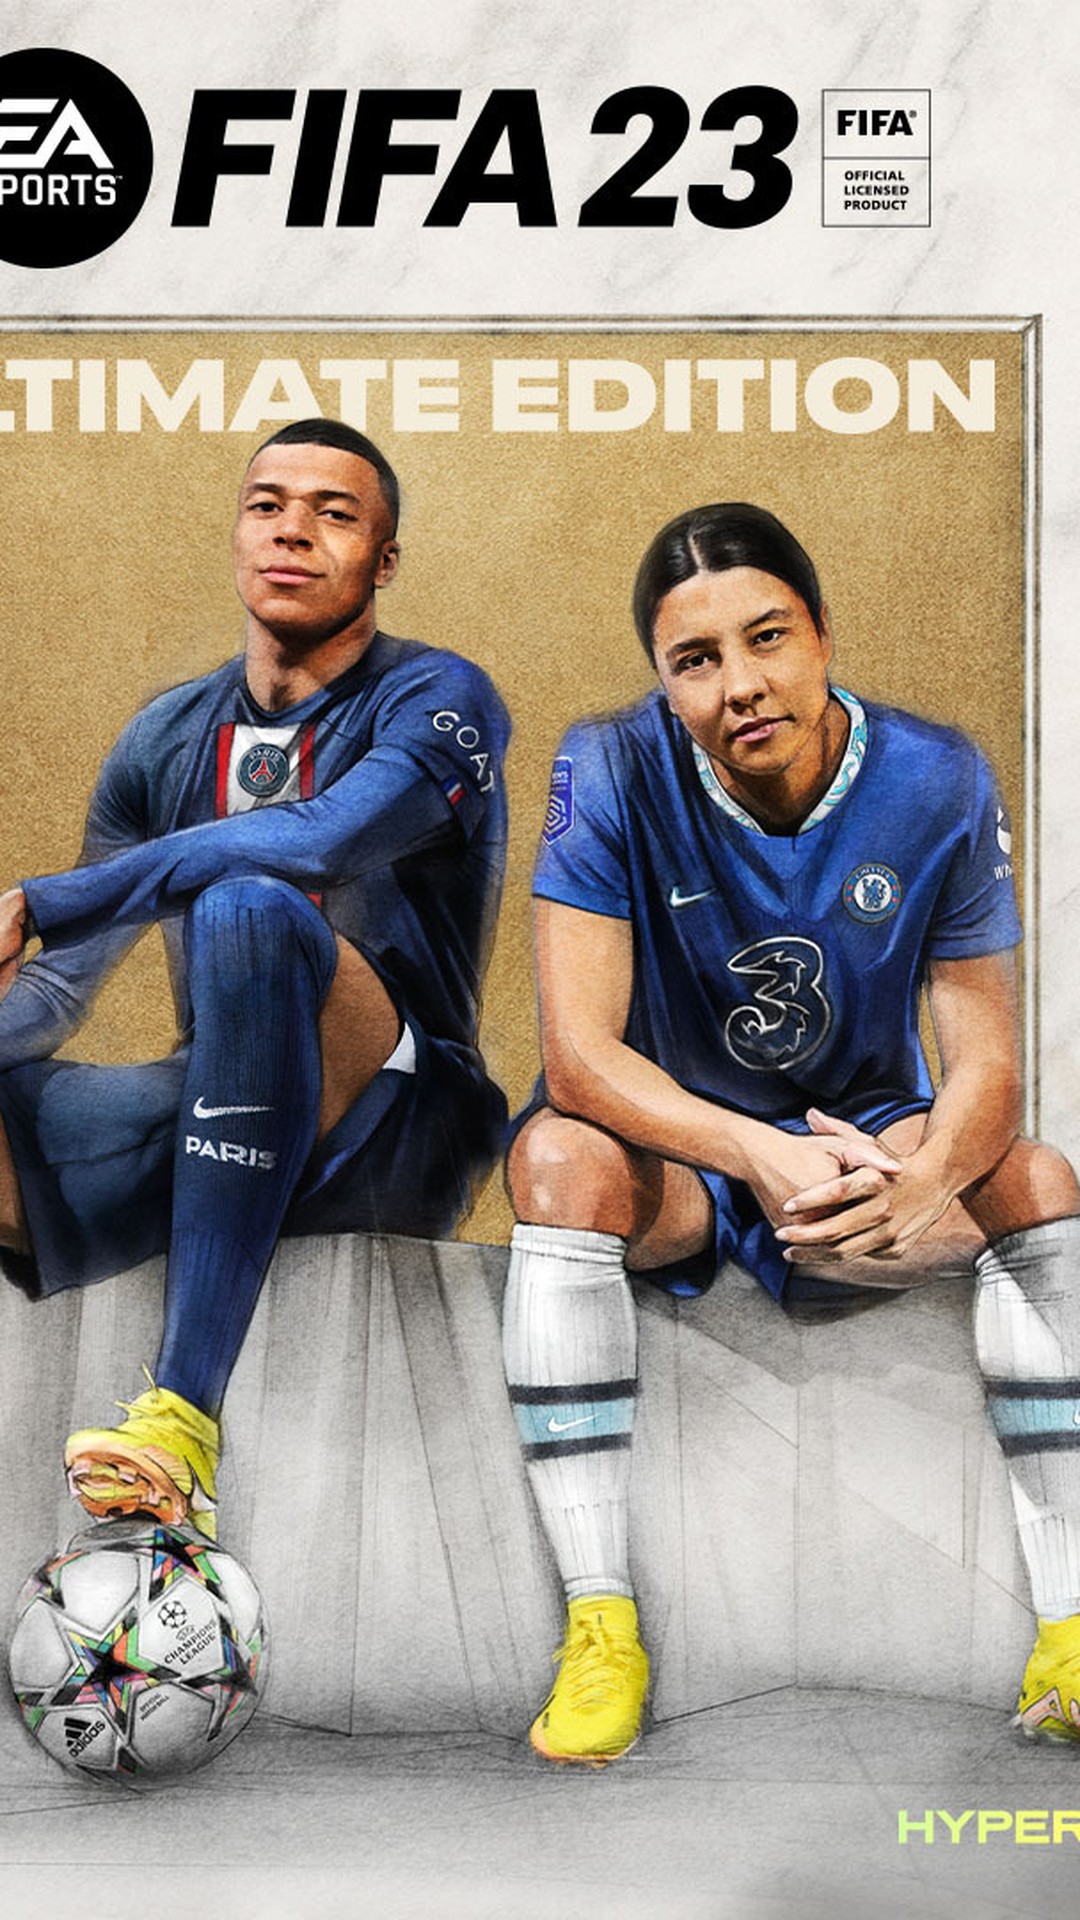 EA anuncia FC Mobile, com Vini Jr. na capa